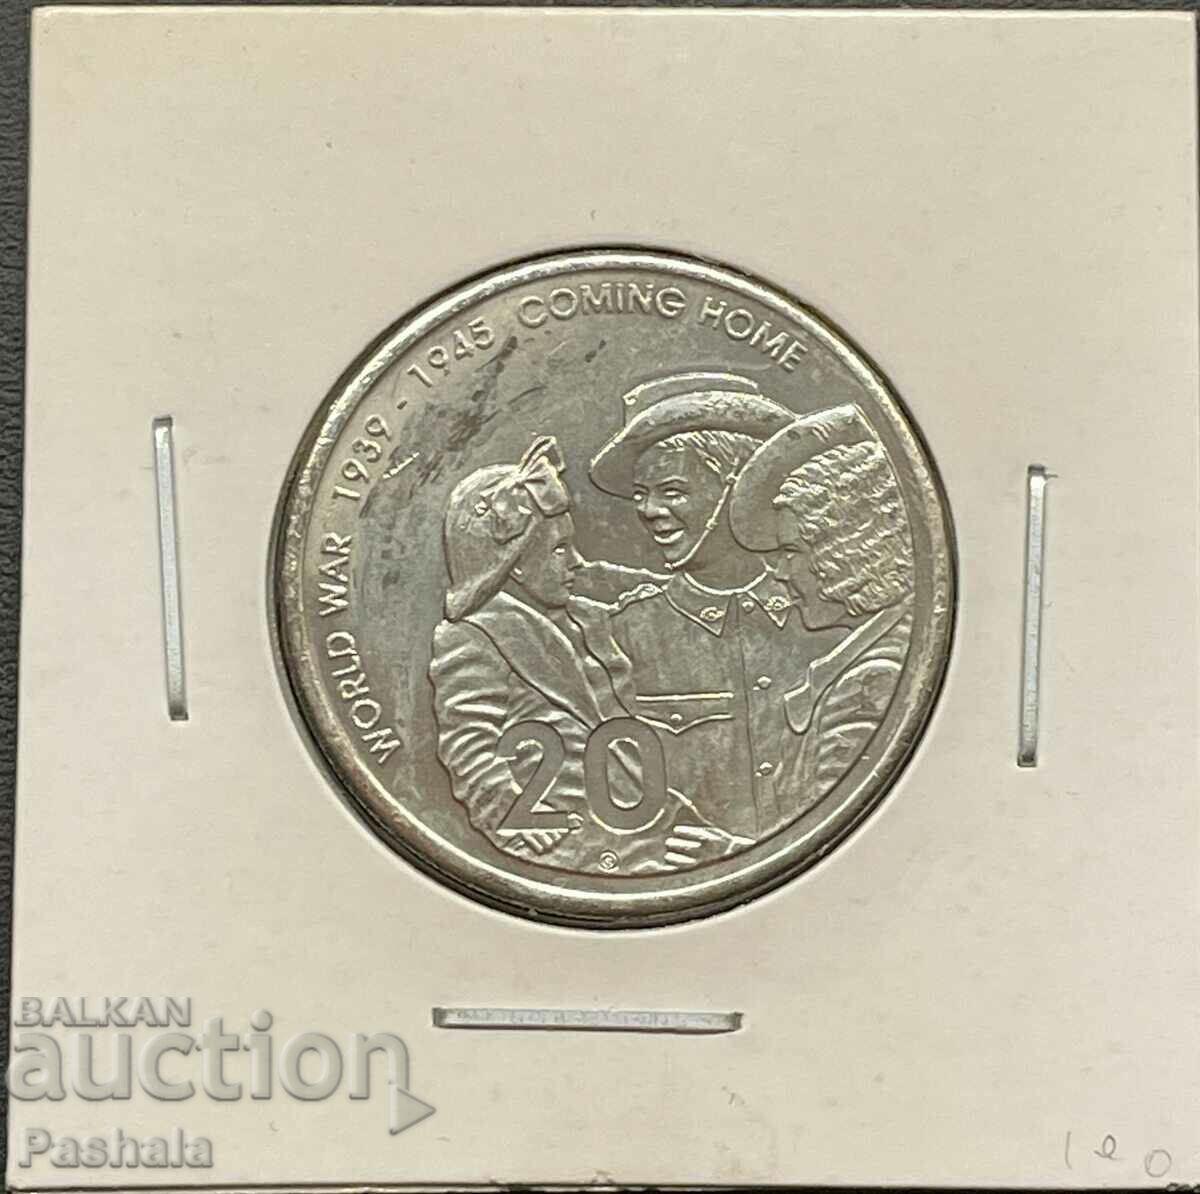 Australia 20 cents 2005